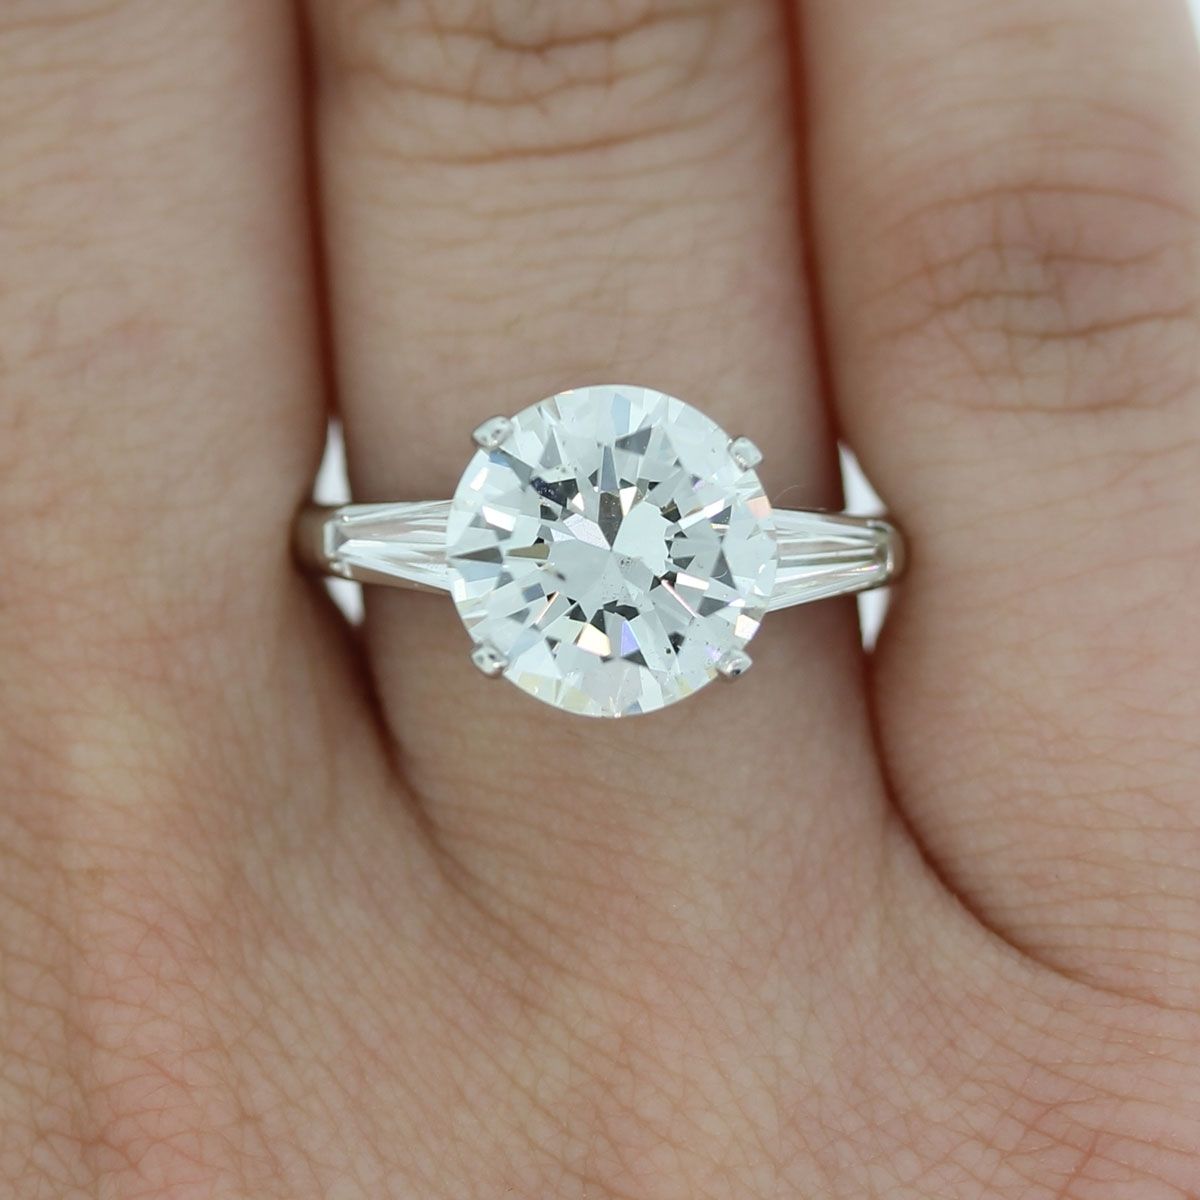 3 Carat Diamond Ring With Baguettes Tsavorite Engagement Ring